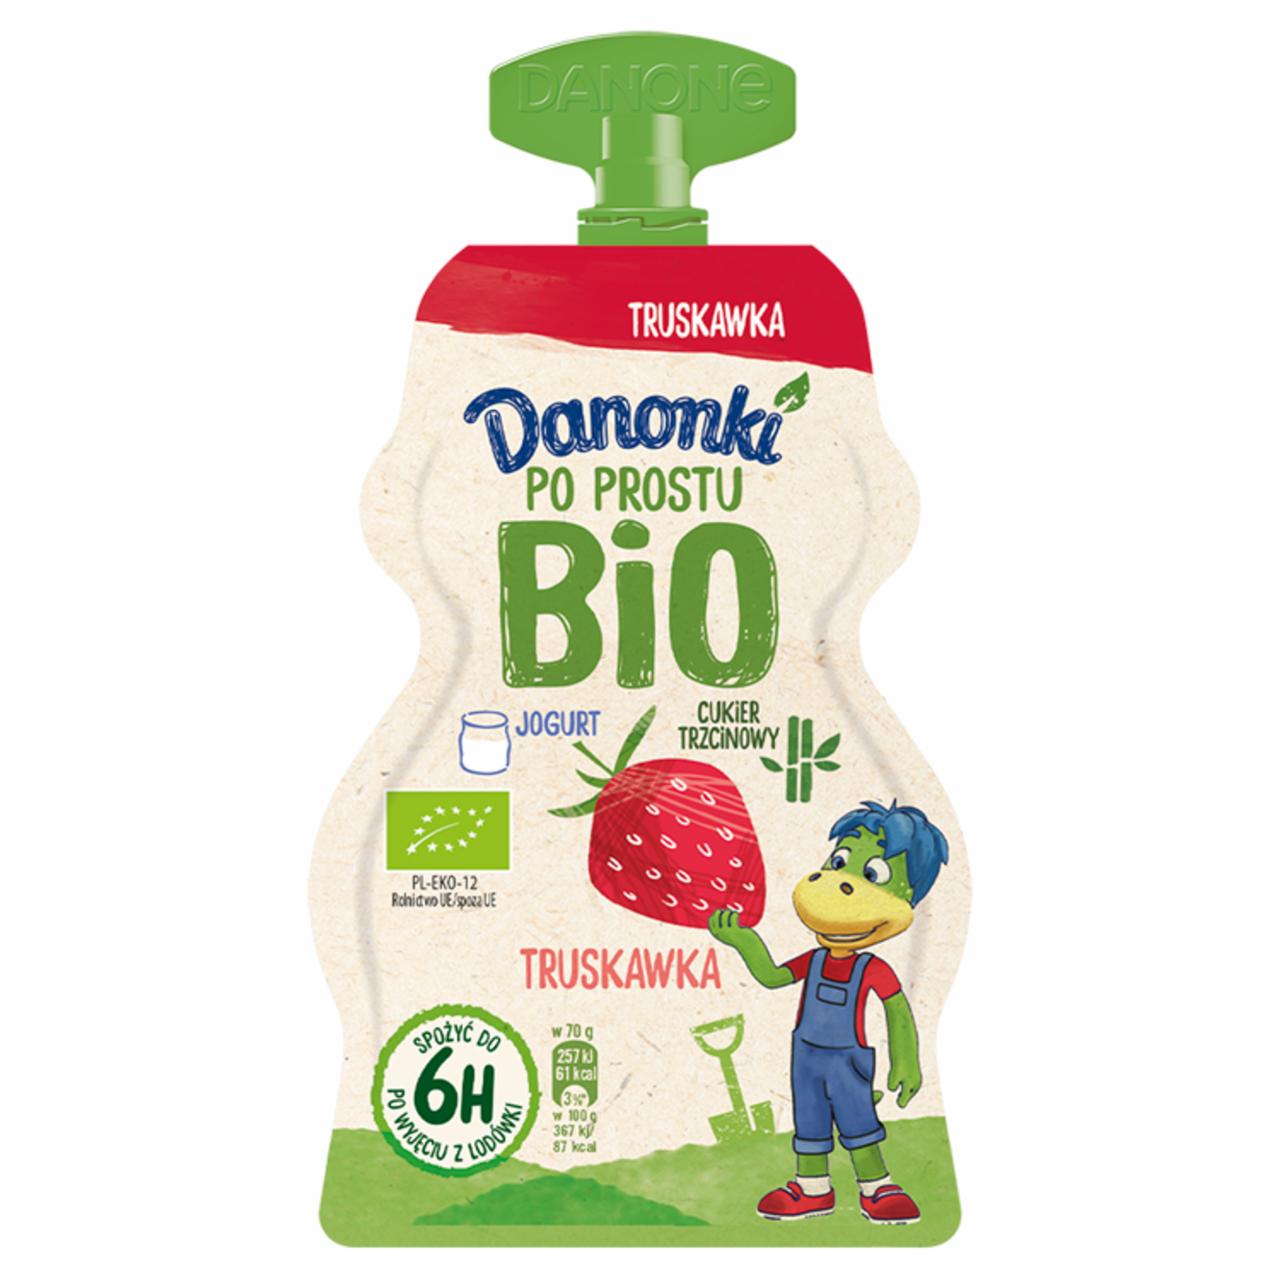 Zdjęcia - Danone Danonki Po prostu Bio Jogurt truskawka 70 g